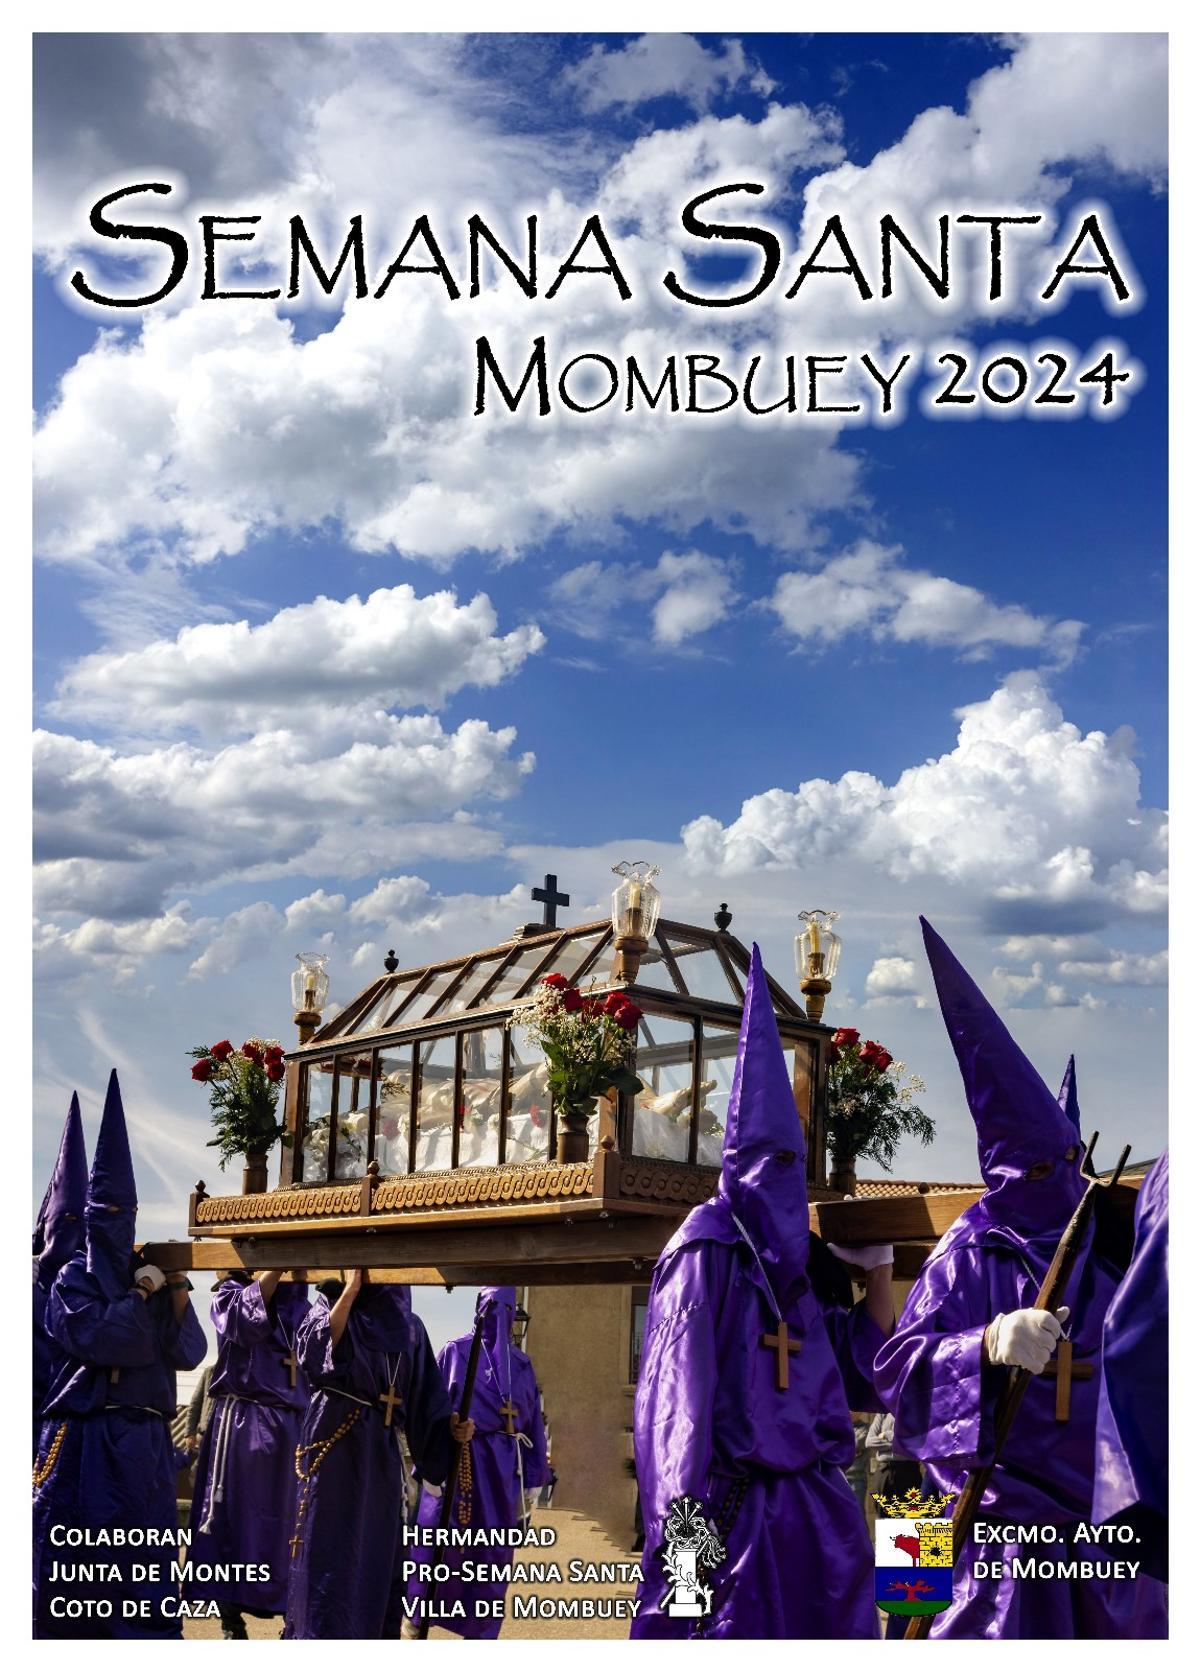 Cartel promocional de la Semana Santa de Mombuey